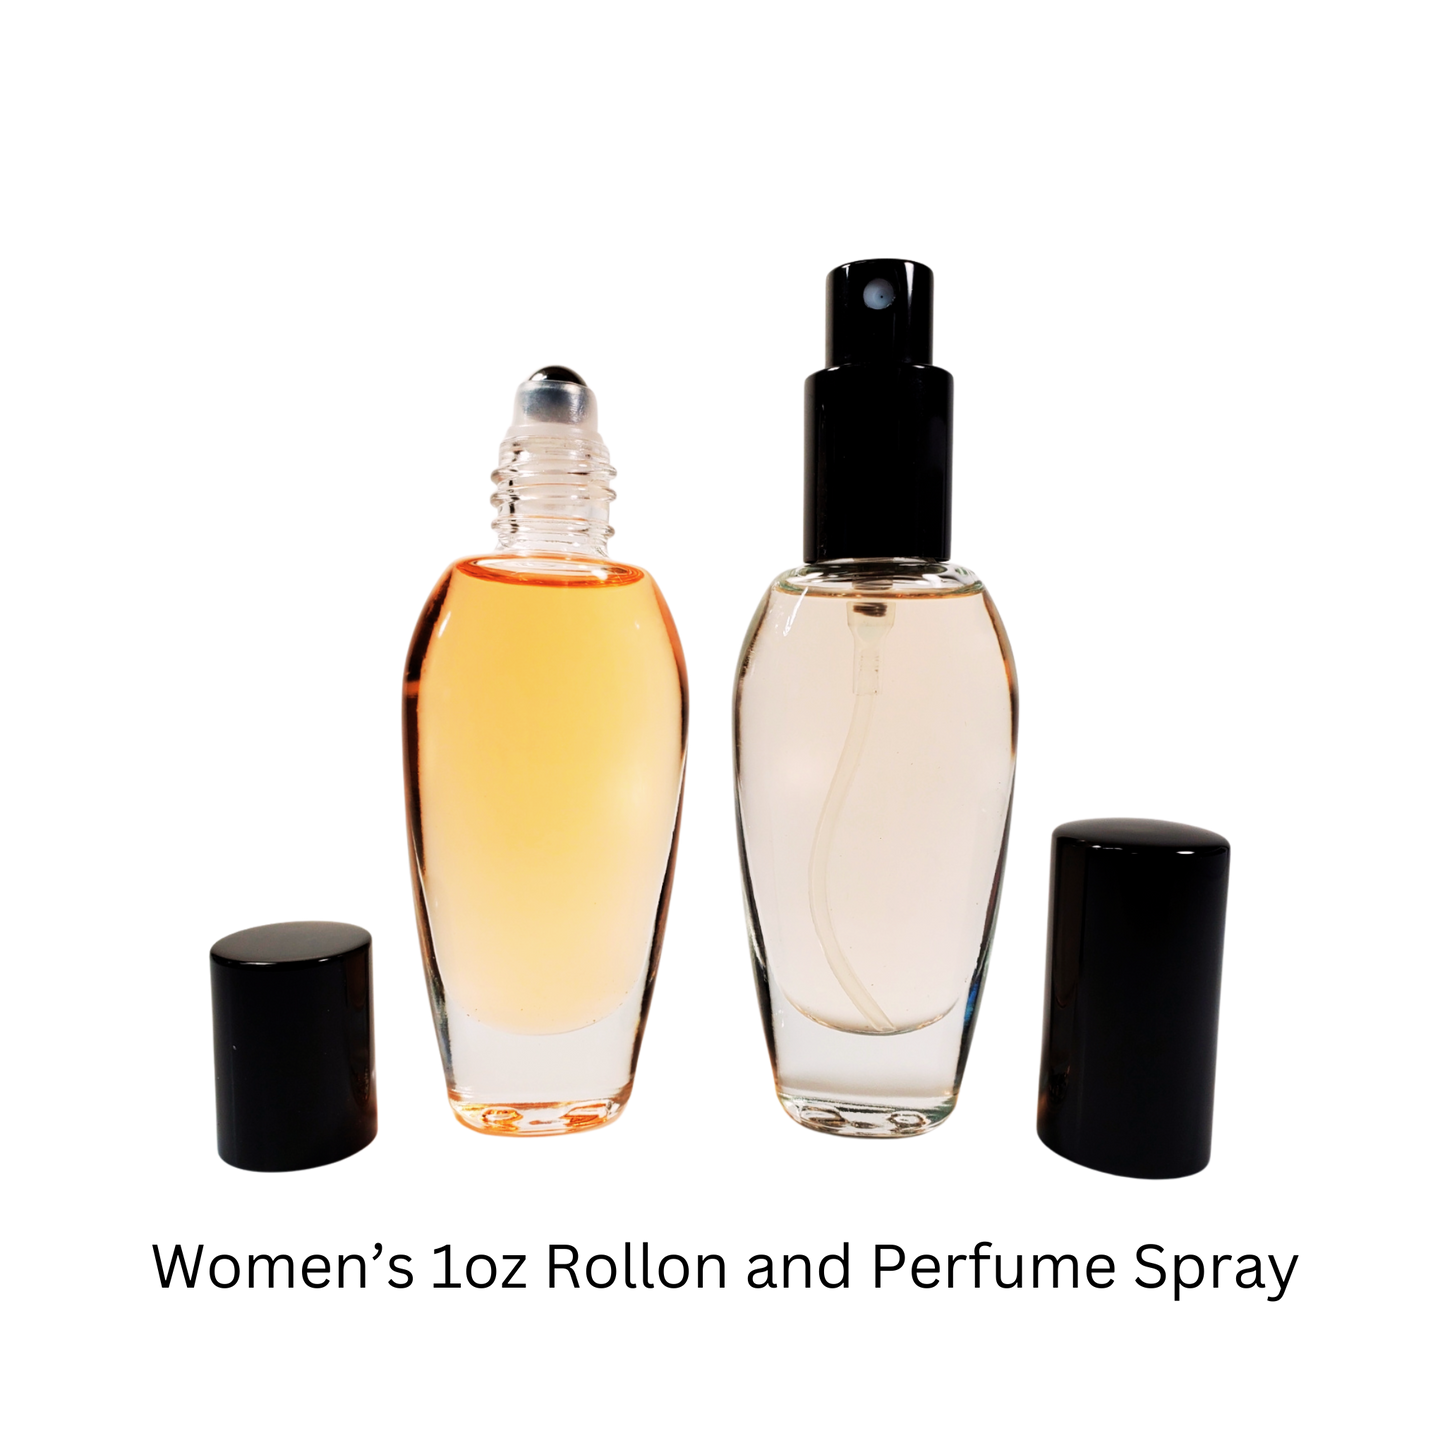 J'Adore Absolu Type* / Perfume Body Oil / Eau de Parfum